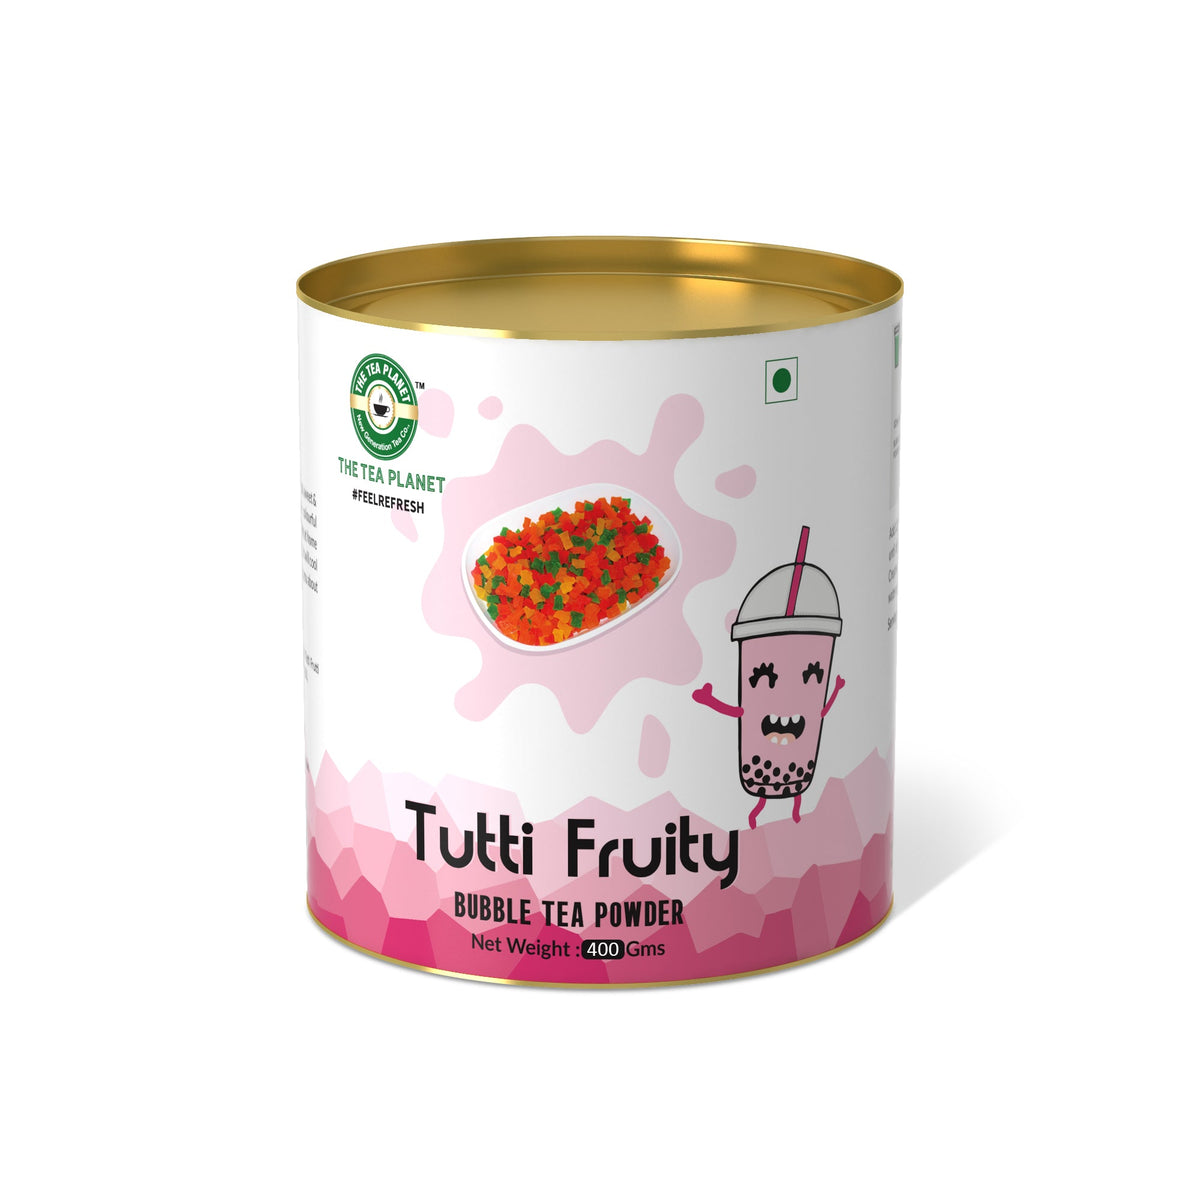 Tutti Fruity Bubble Tea Premix - 250 gms